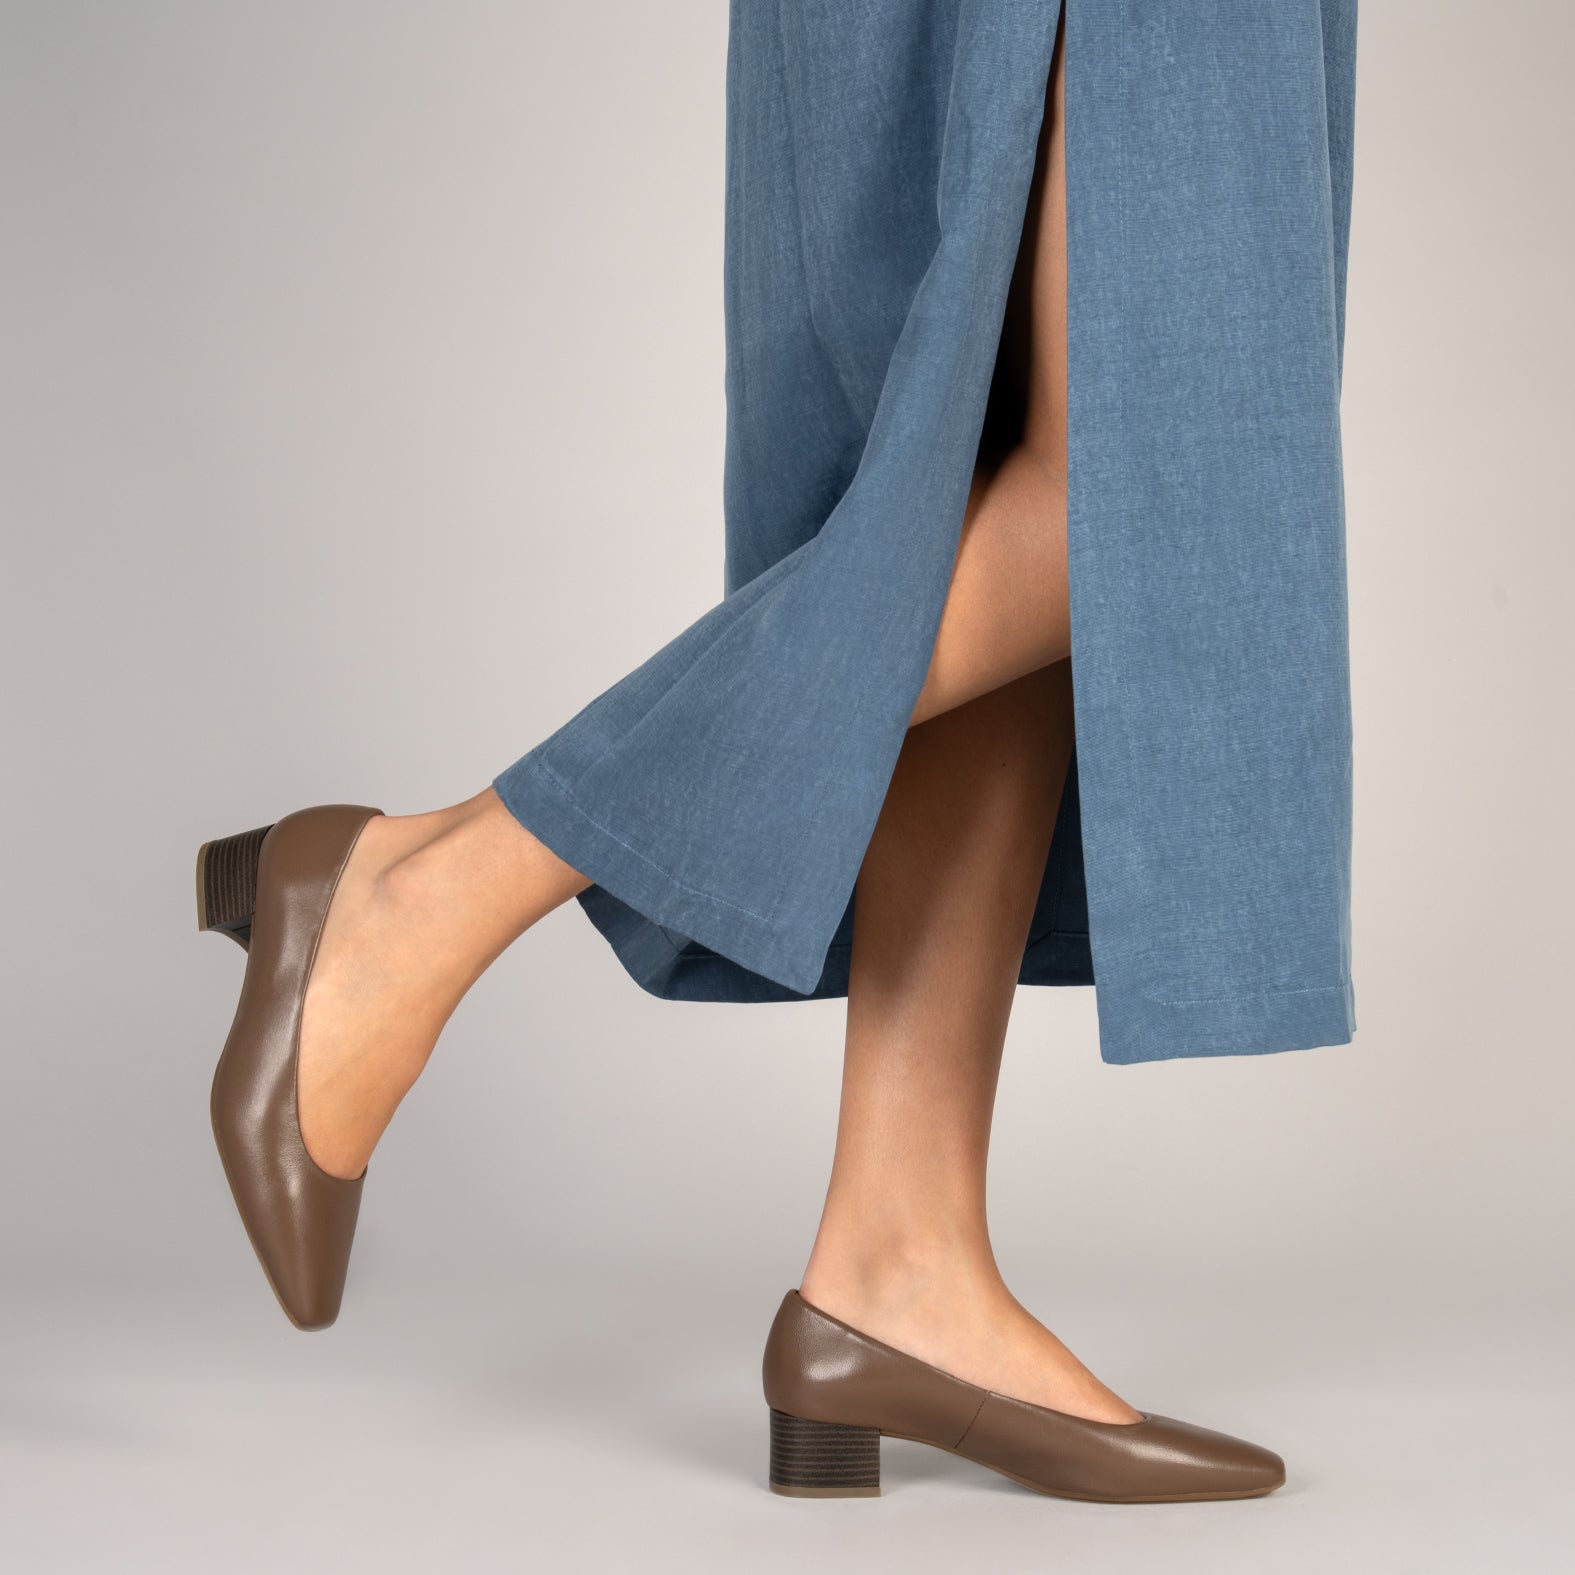 URBAN LADY – BROWN Low heel nappa shoes 